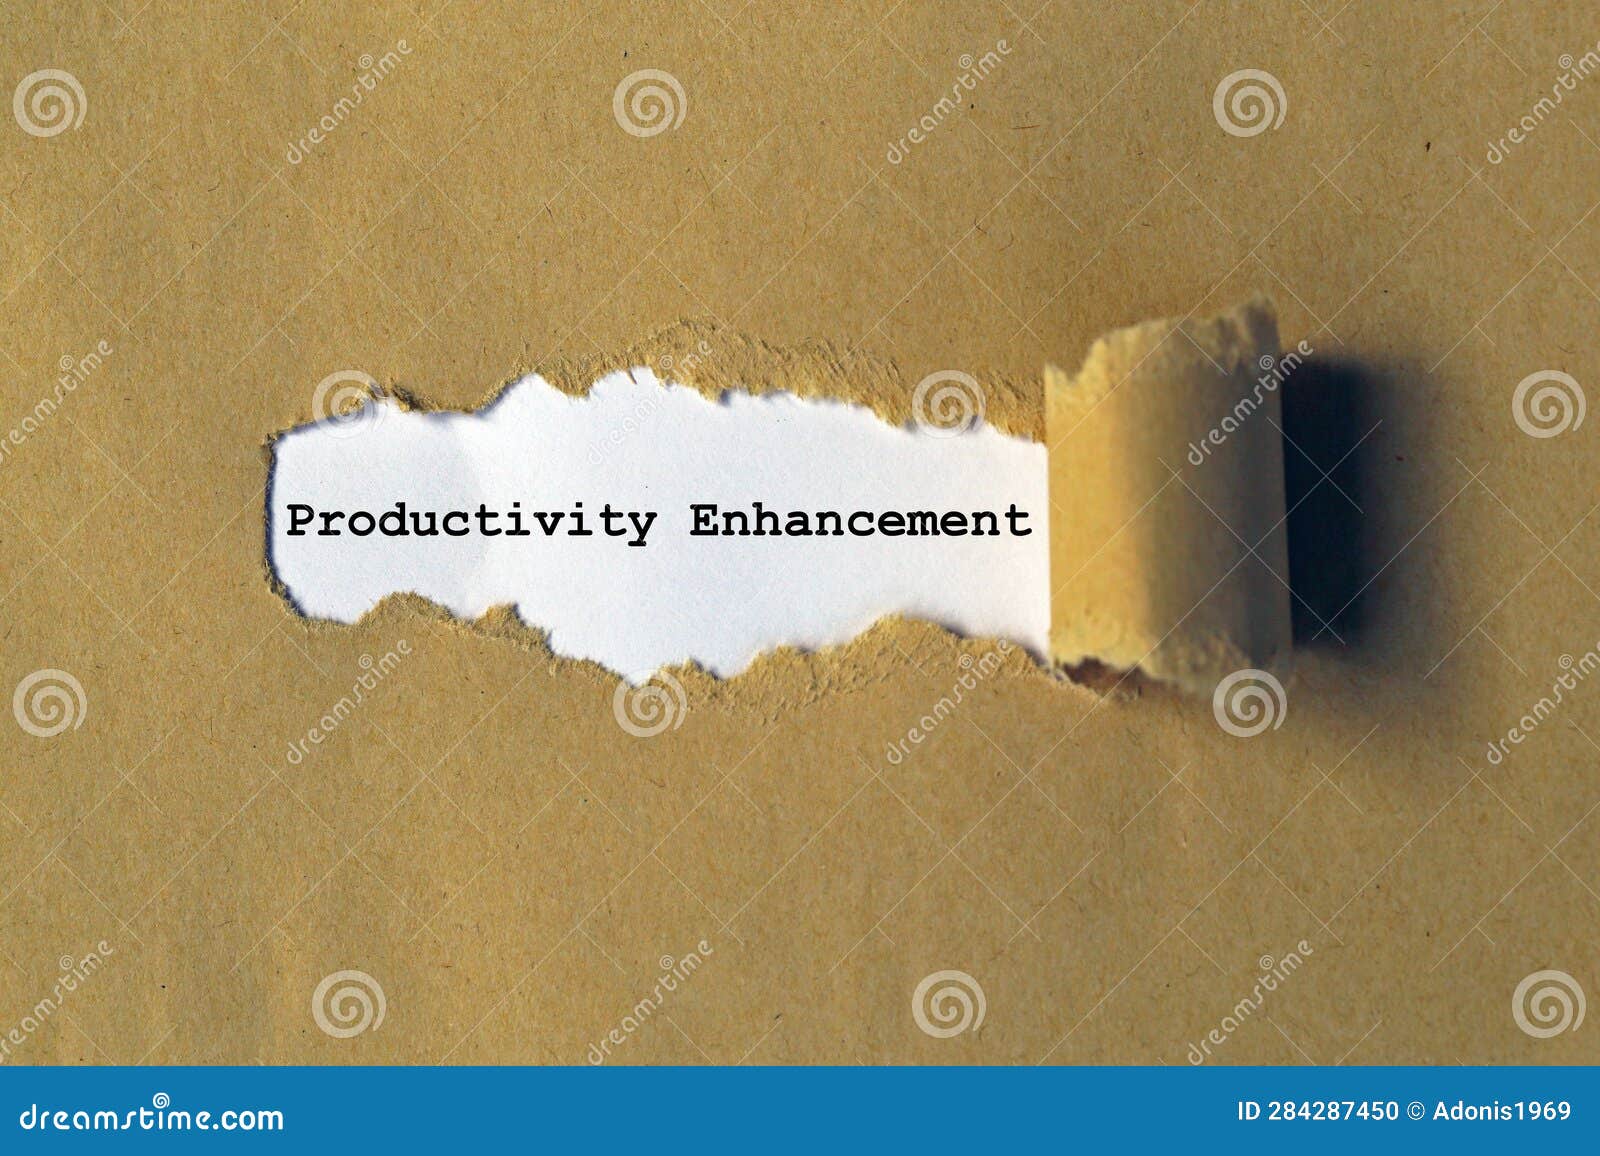 productivity enhancement on white paper